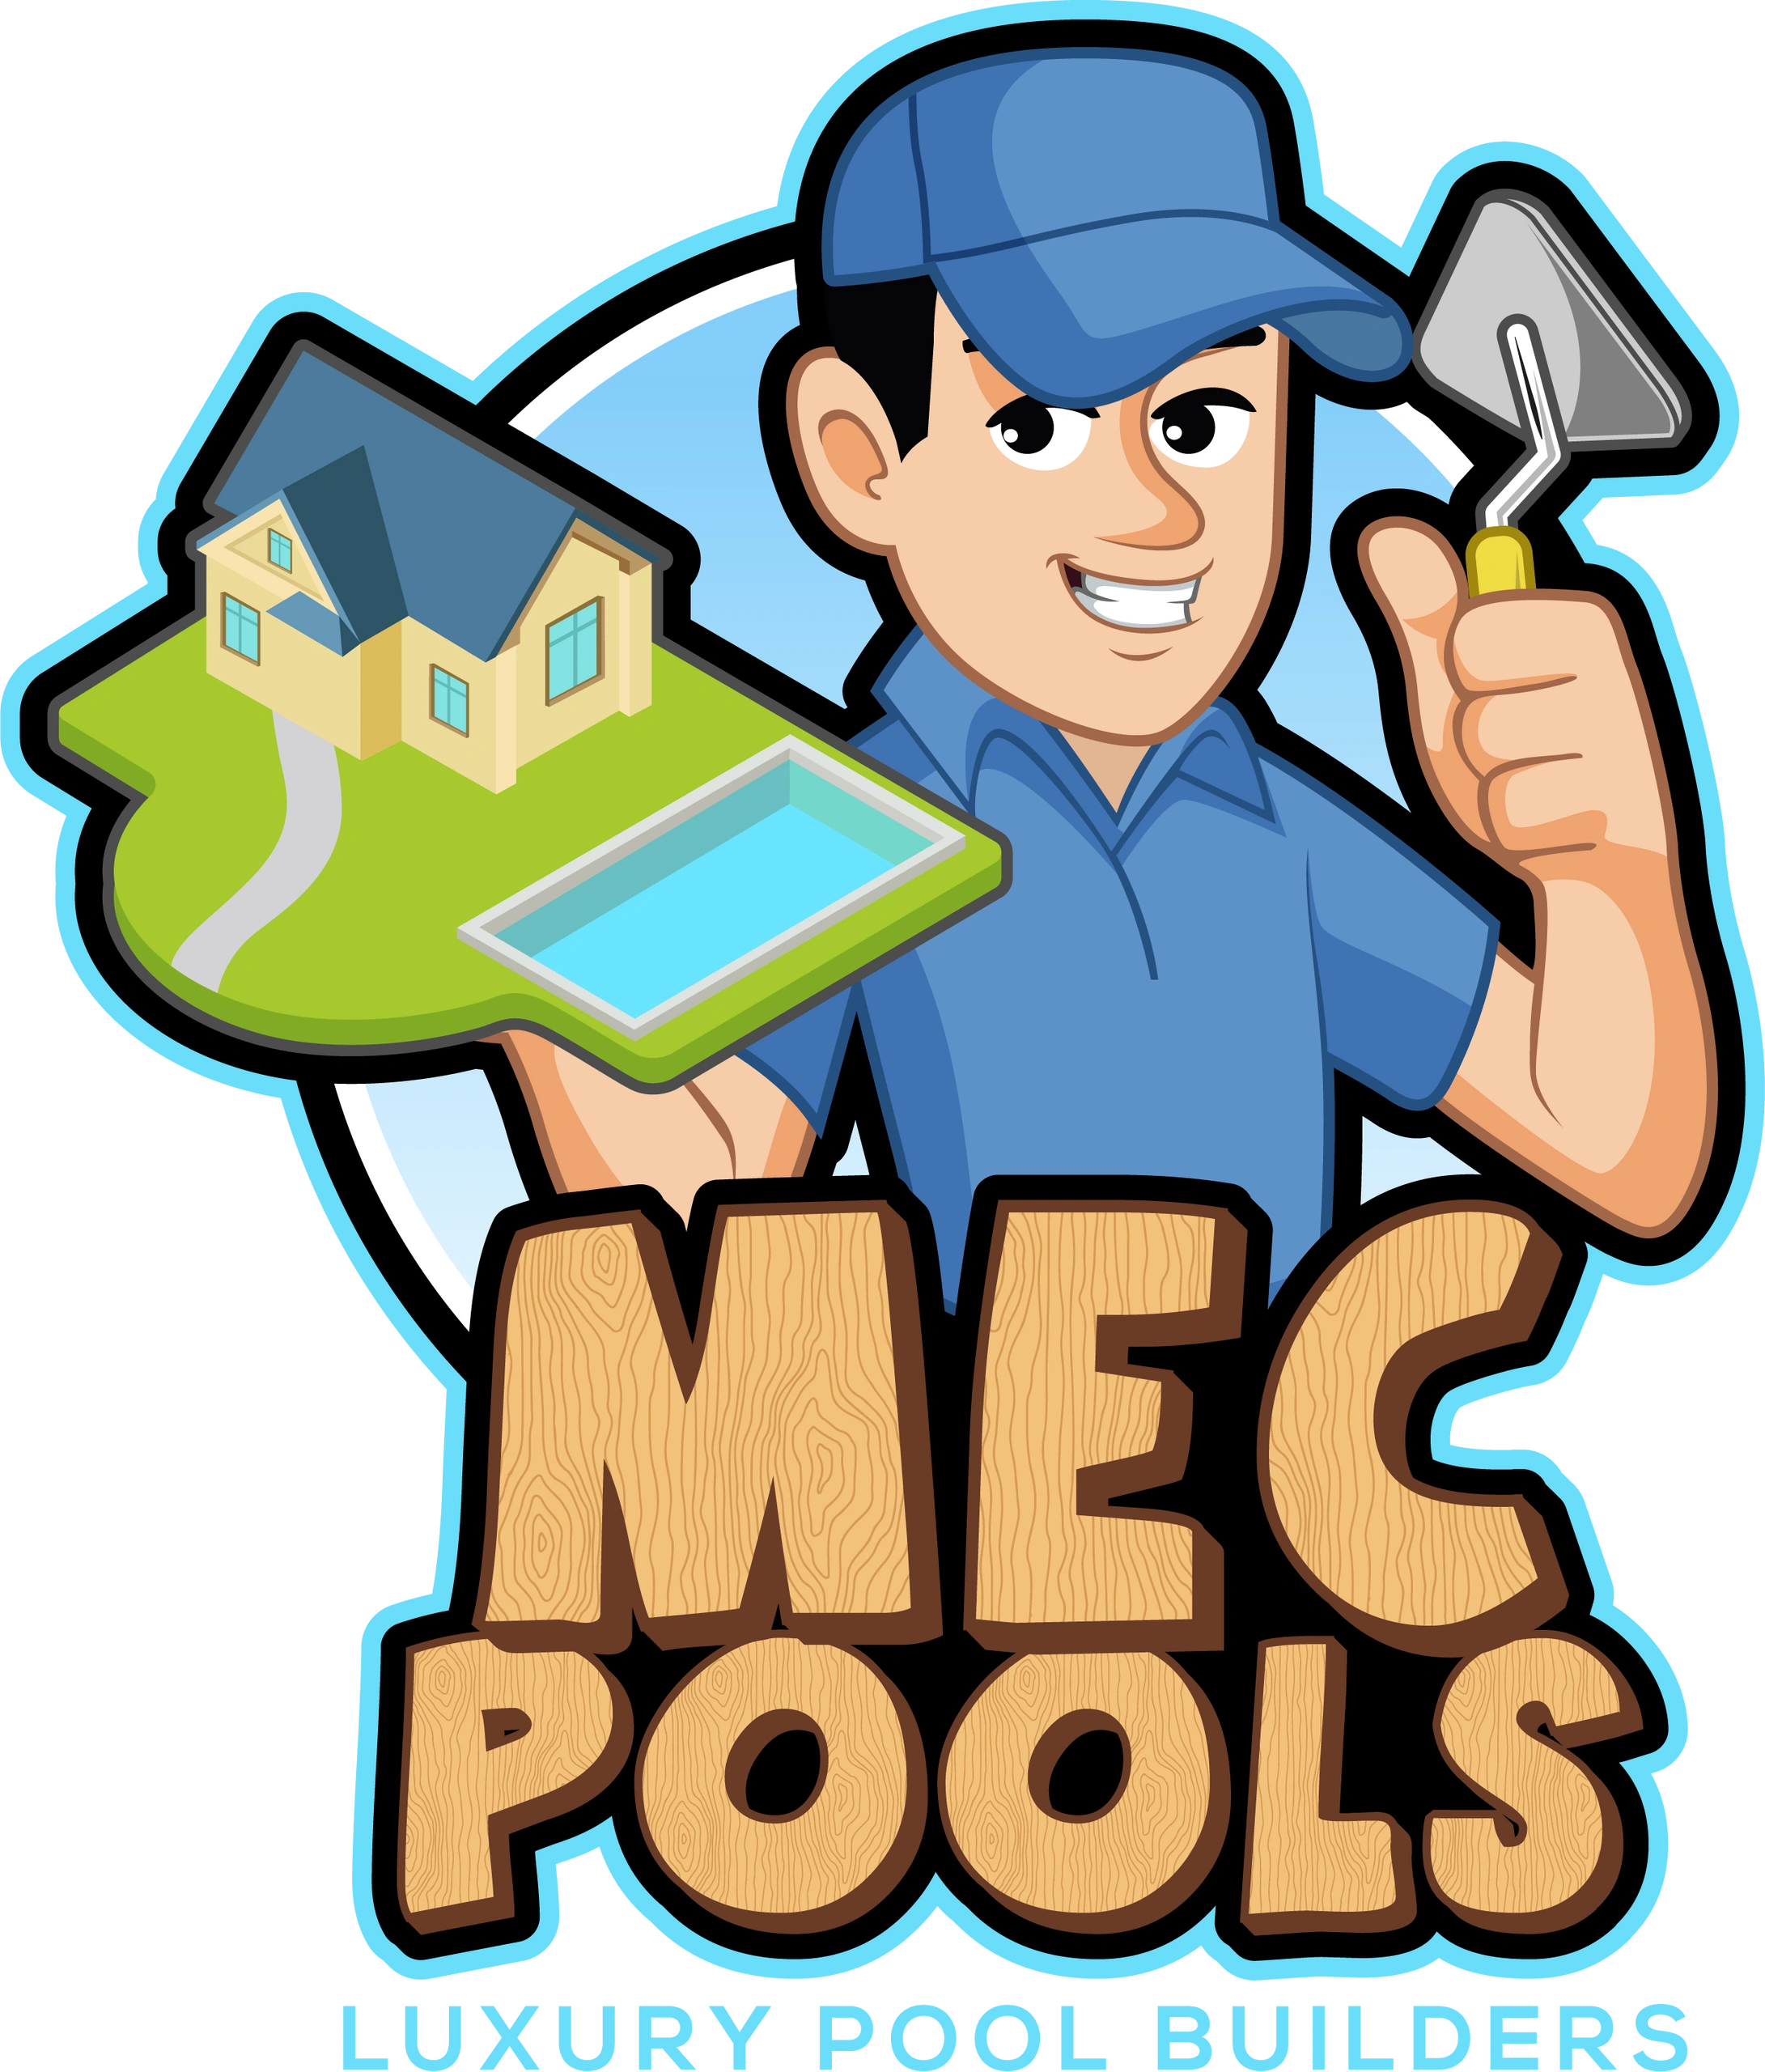 MEC Pools is a luxury pool builder in Corpus Christi, TX, providing design and gunite contracting.